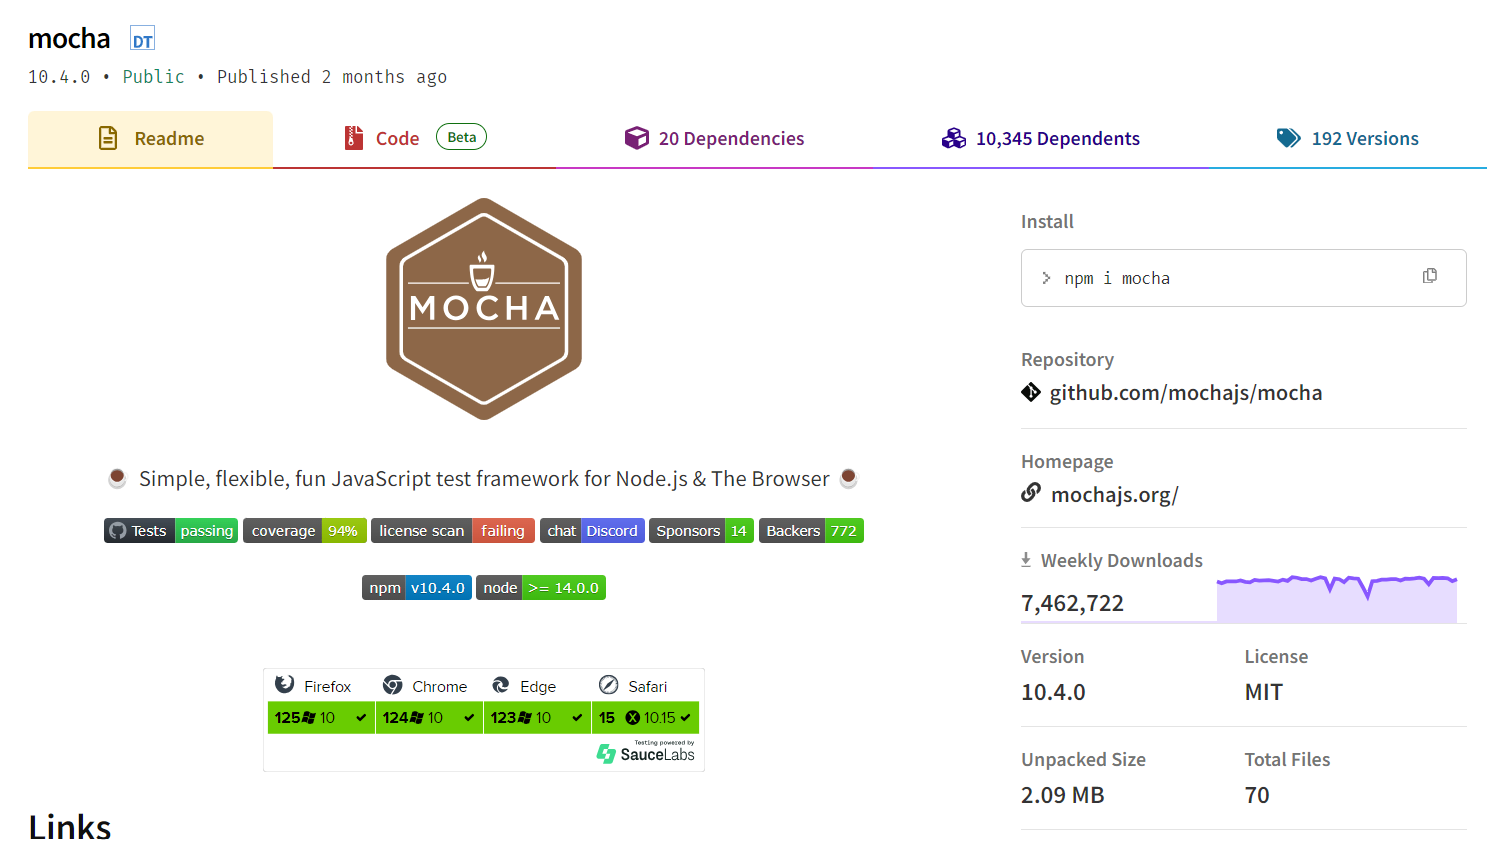 Mocha JavaScript testing framework had 7,462,722 weekly downloads